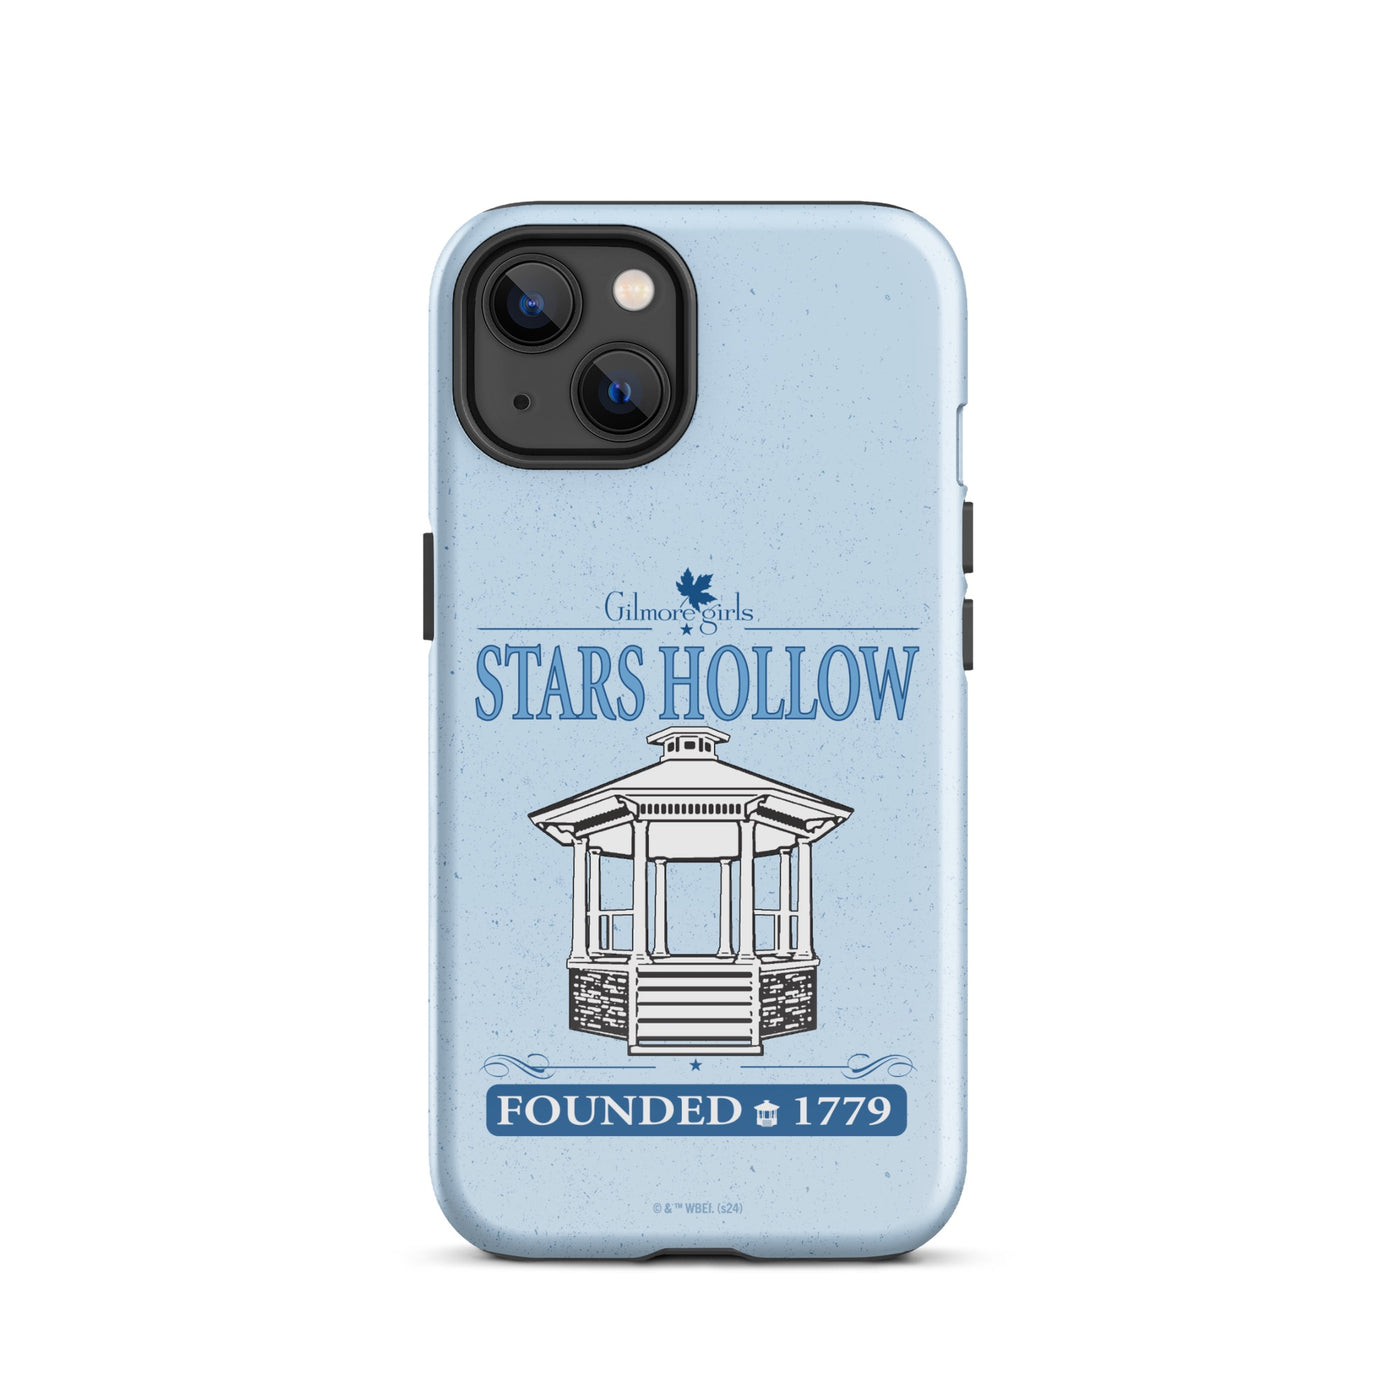 Gilmore Girls Stars Hollow iPhone Tough Case